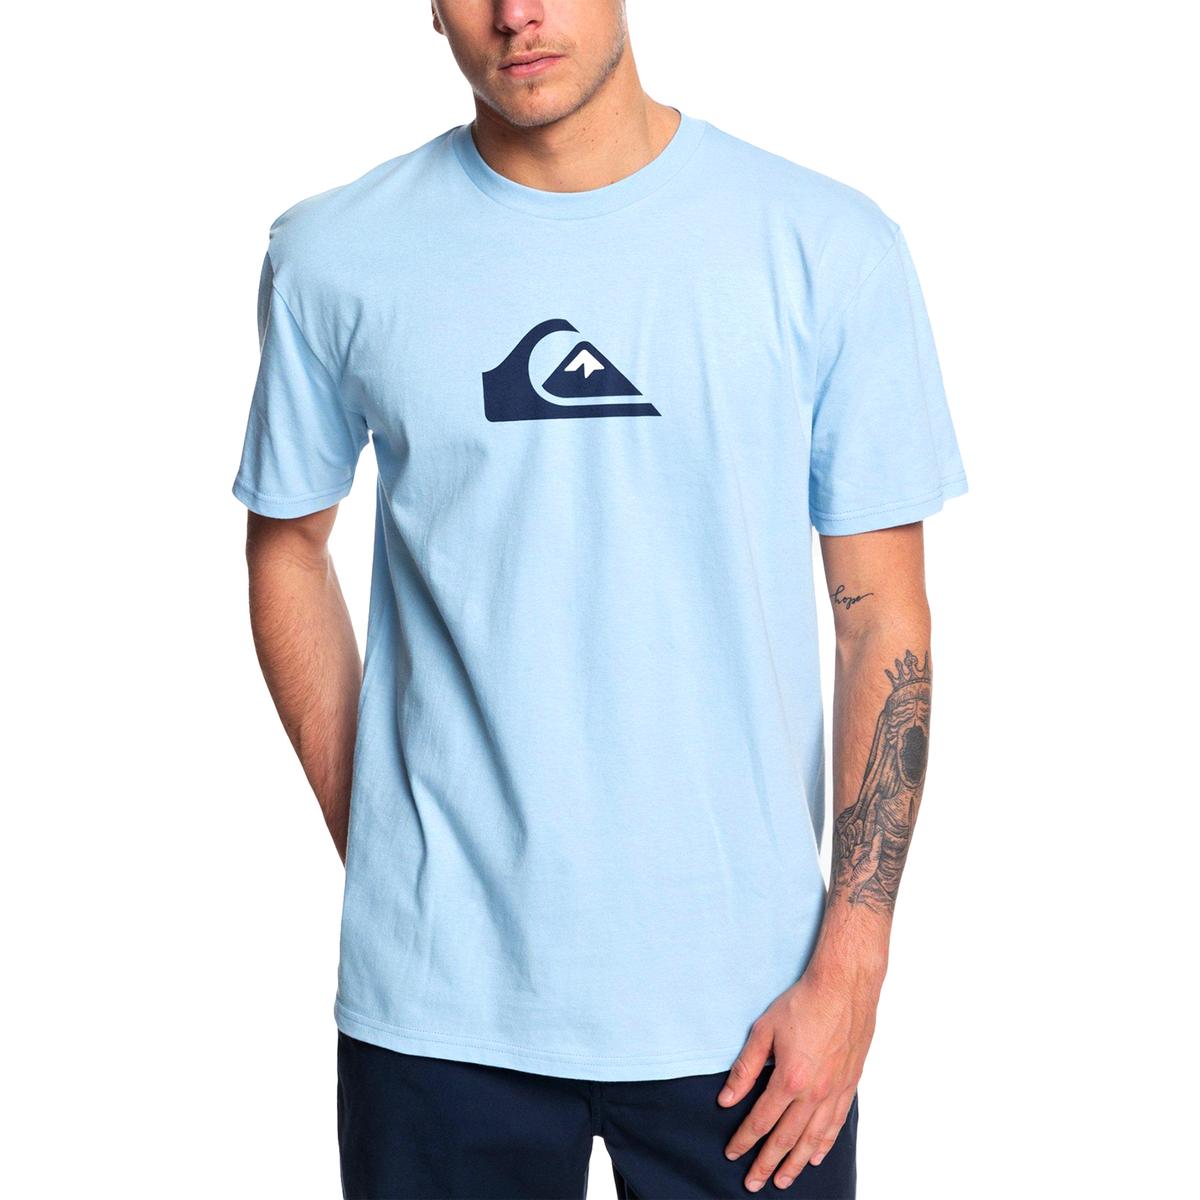 Quiksilver Mens Cotton Logo Graphic T-Shirt BHFO 0102 | eBay